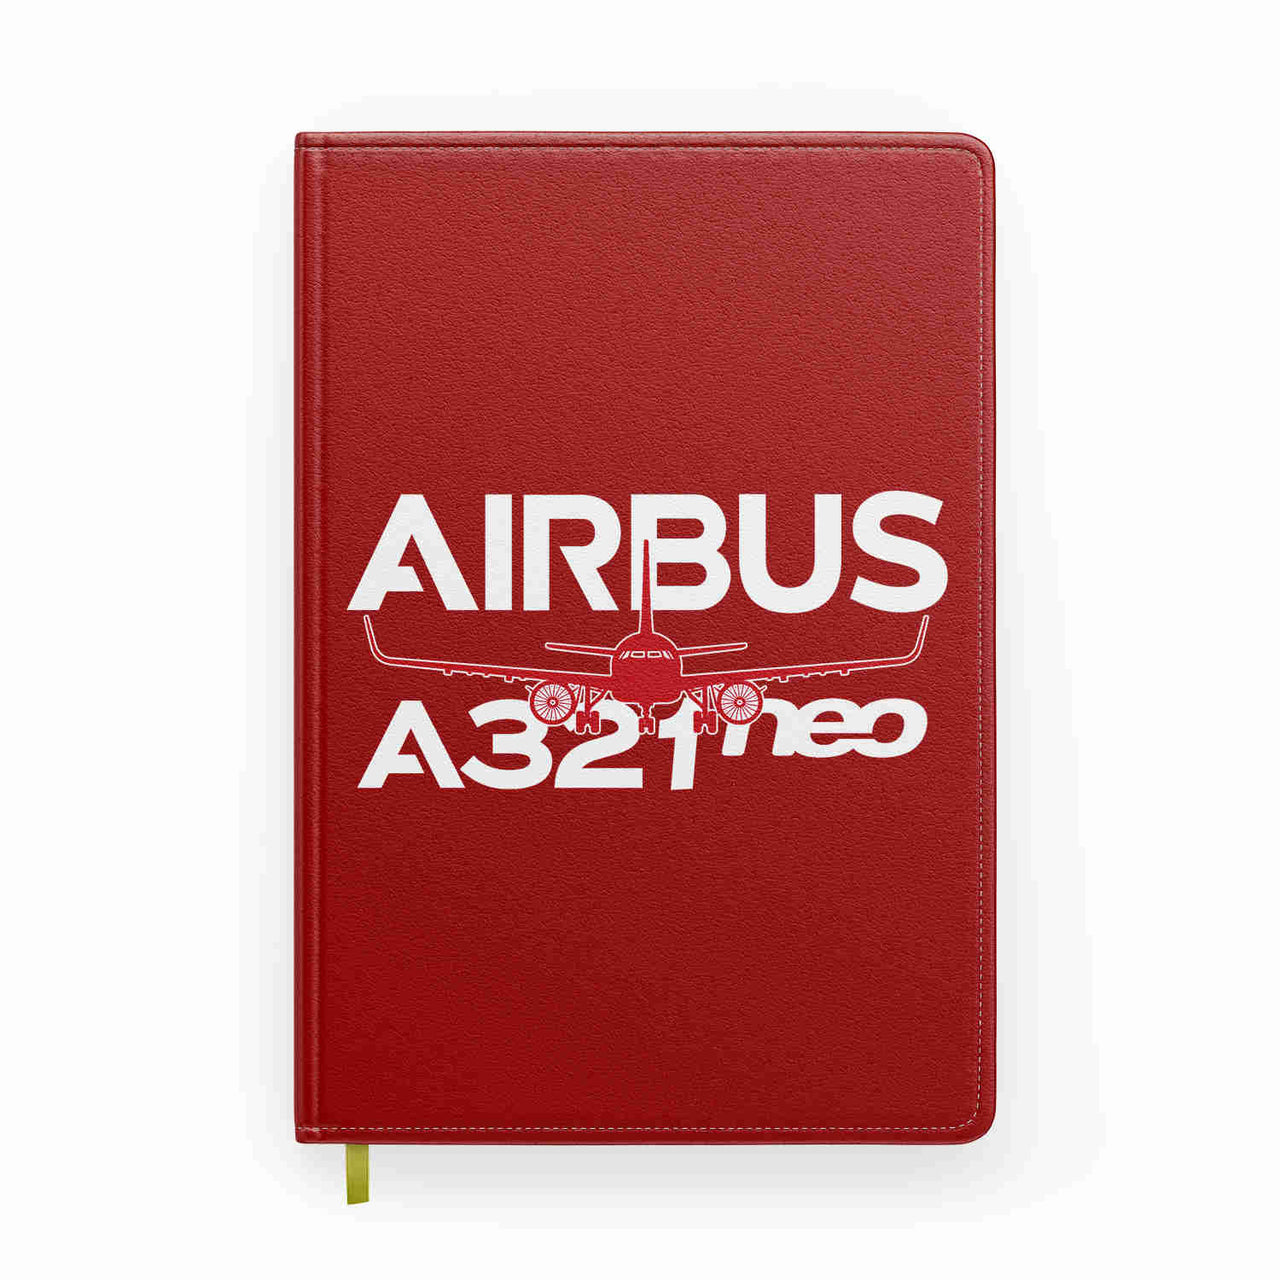 Amazing Airbus A321neo Designed Notebooks